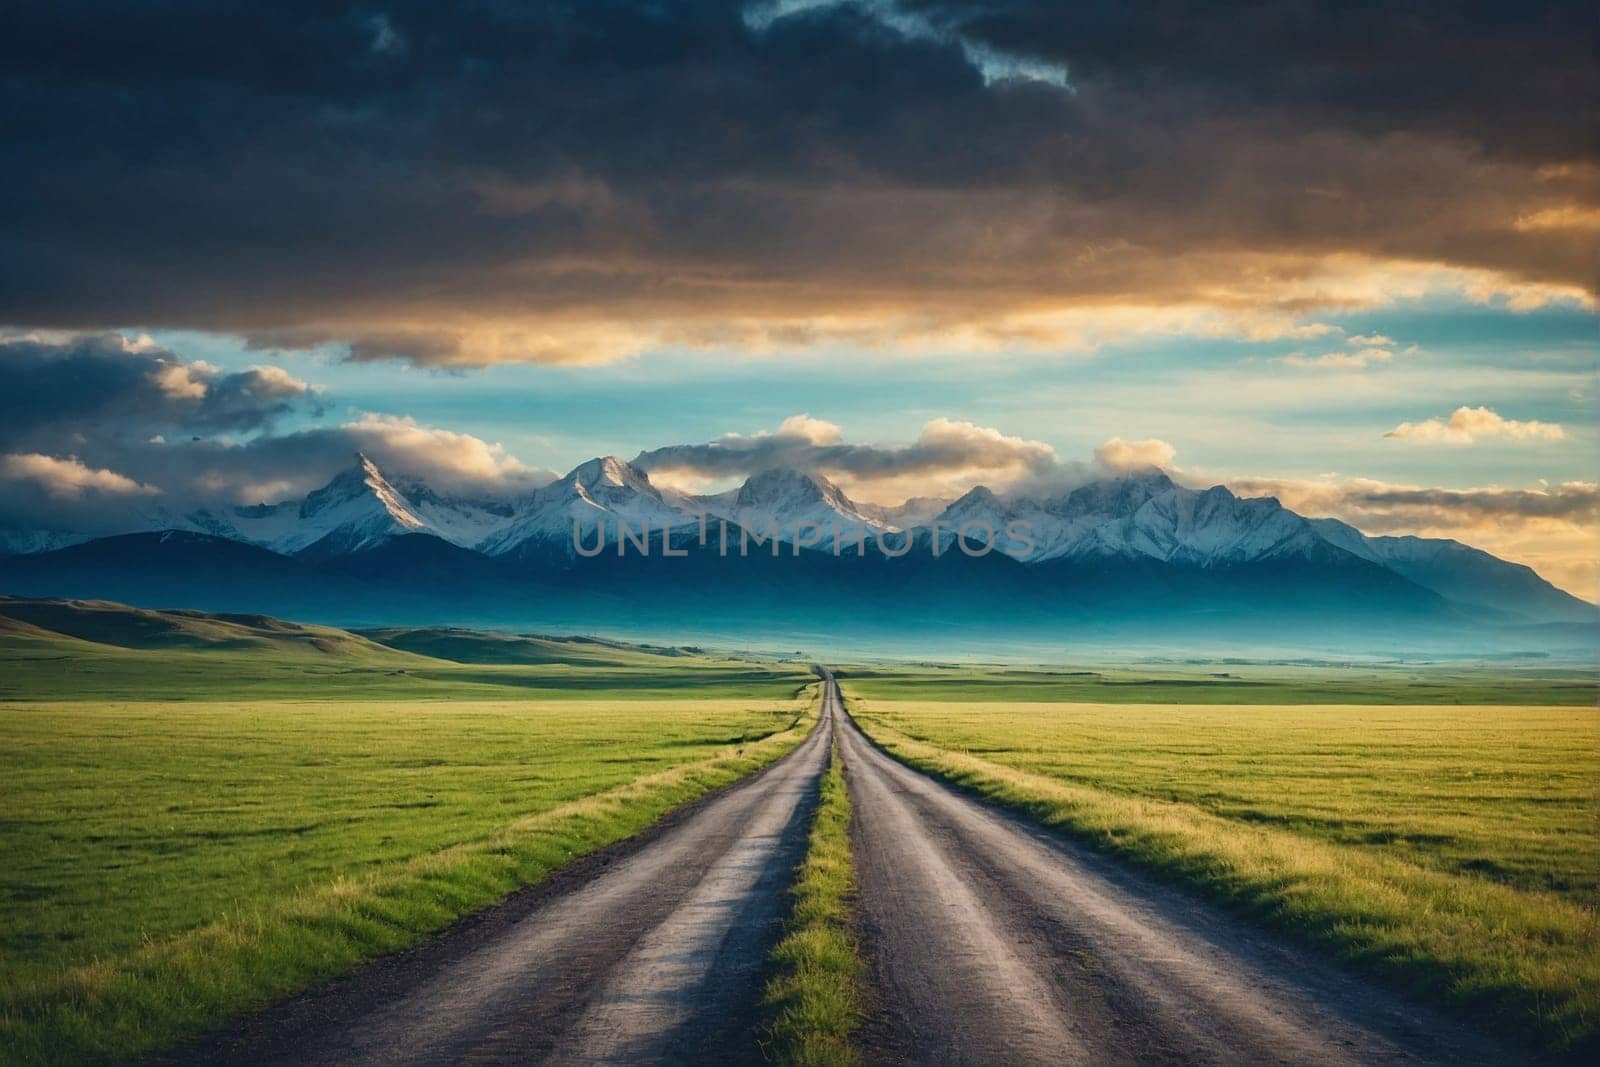 A straightforward image of an empty road running through a vast field.